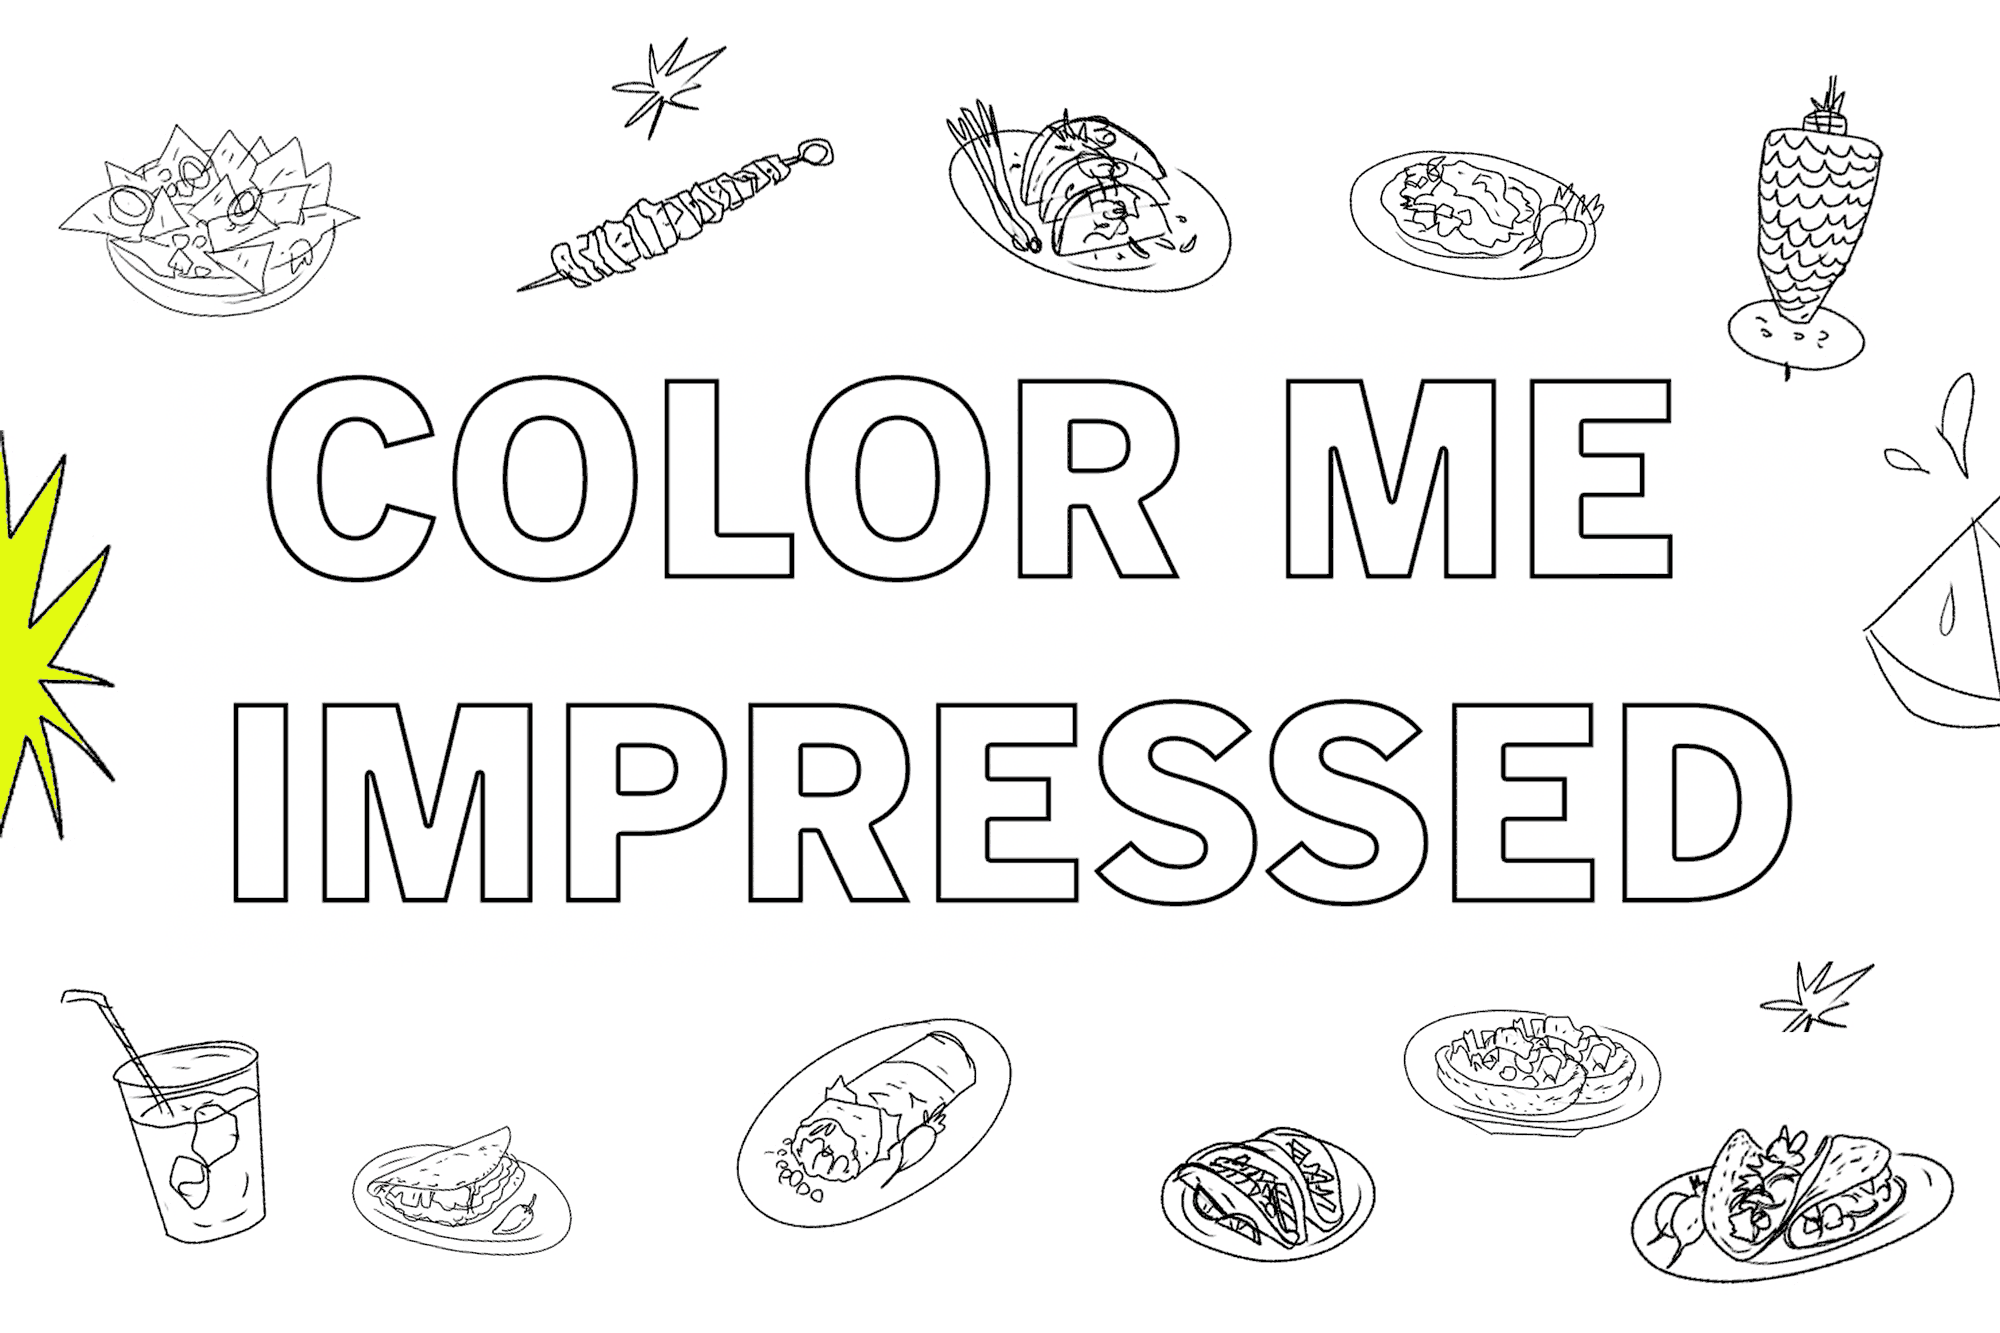 Color me impressed